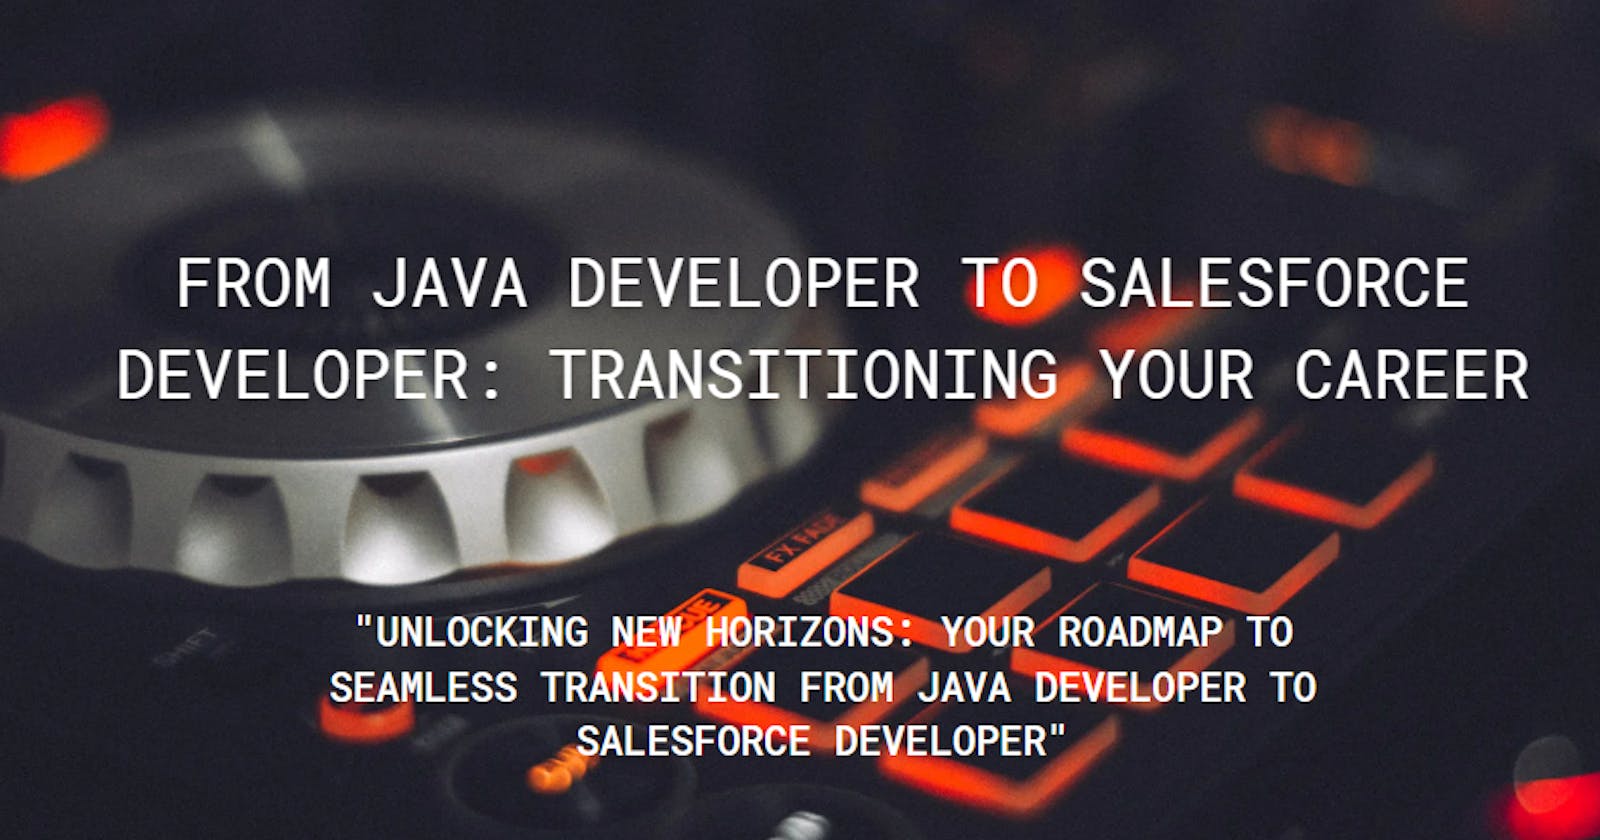 From Java Developer to Salesforce Developer: Transitioning Your Career